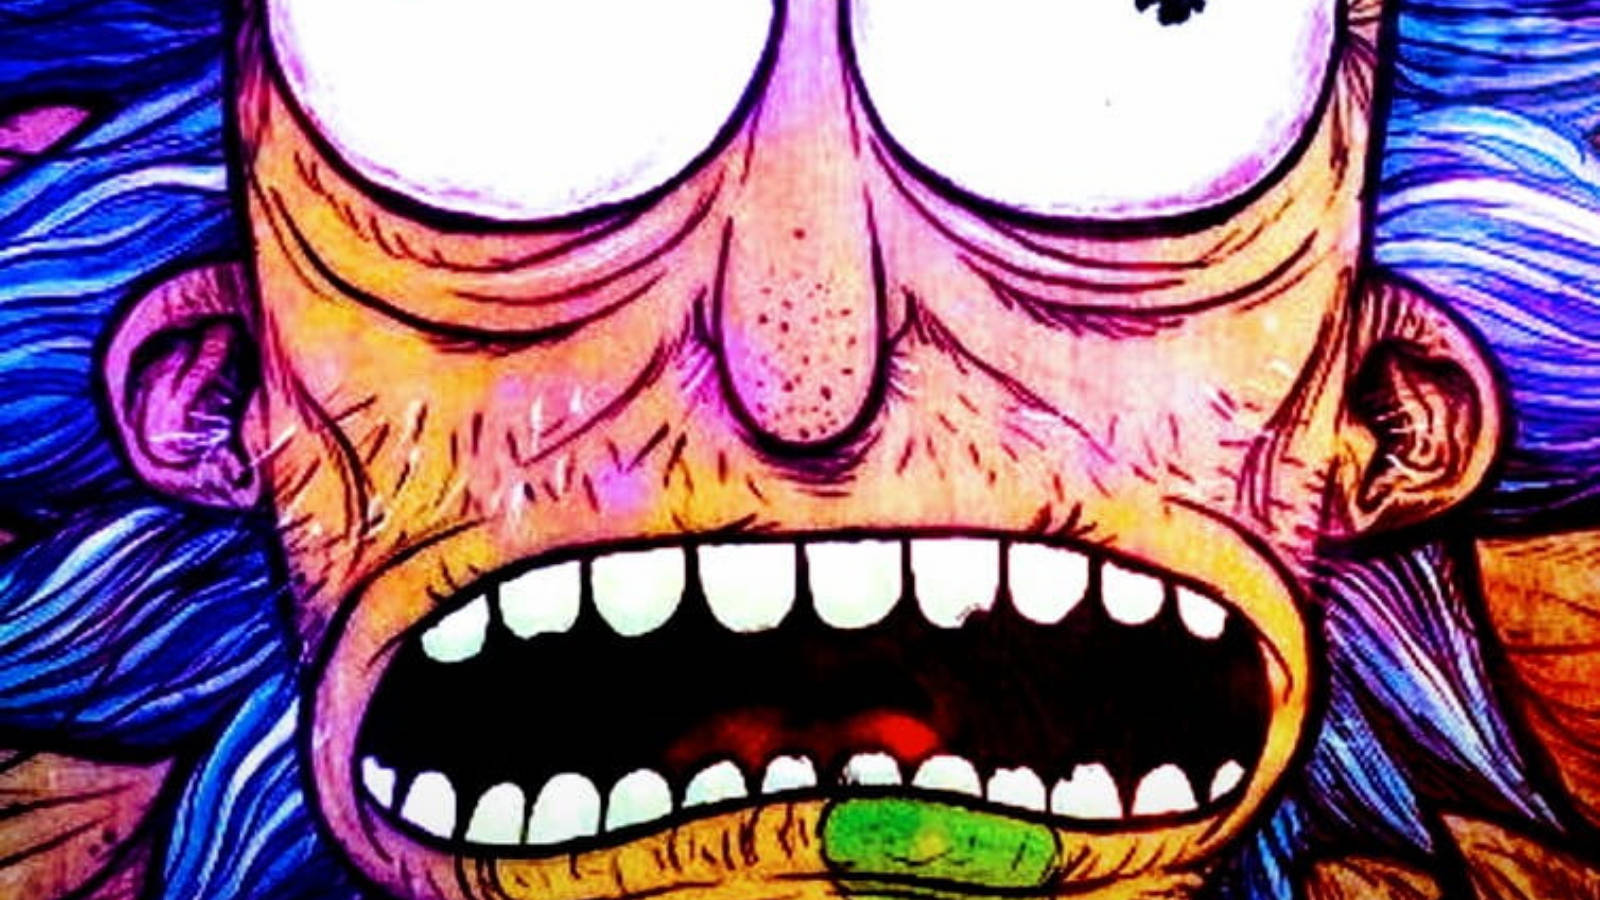 Closeup Rick And Morty Trippy Image Wallpaper